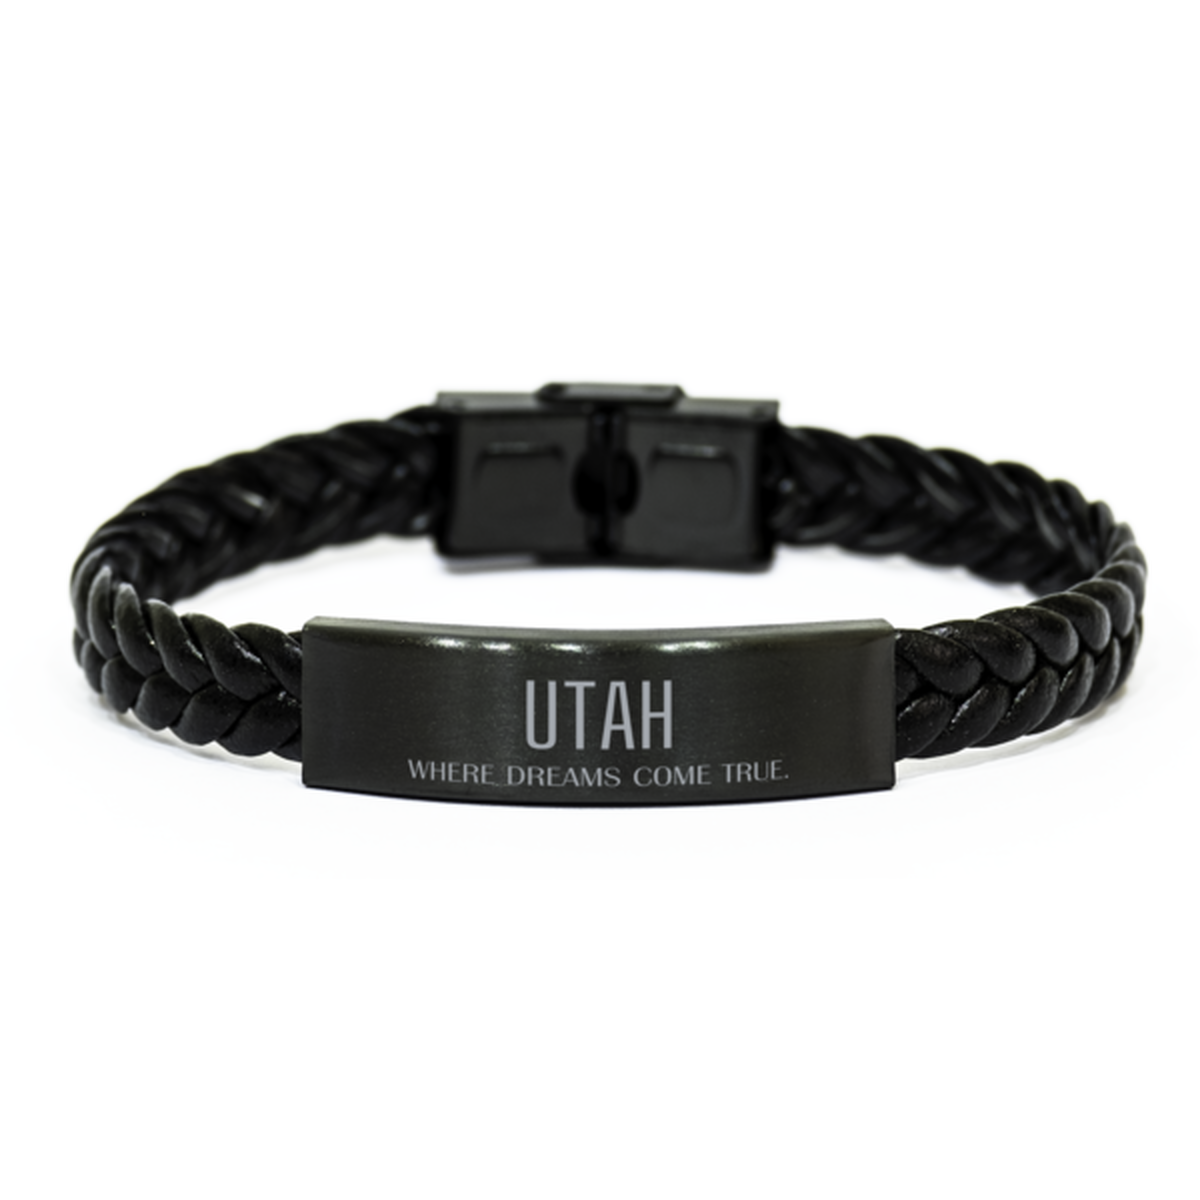 Love Utah State Braided Leather Bracelet, Utah Where dreams come true, Birthday Inspirational Gifts For Utah Men, Women, Friends